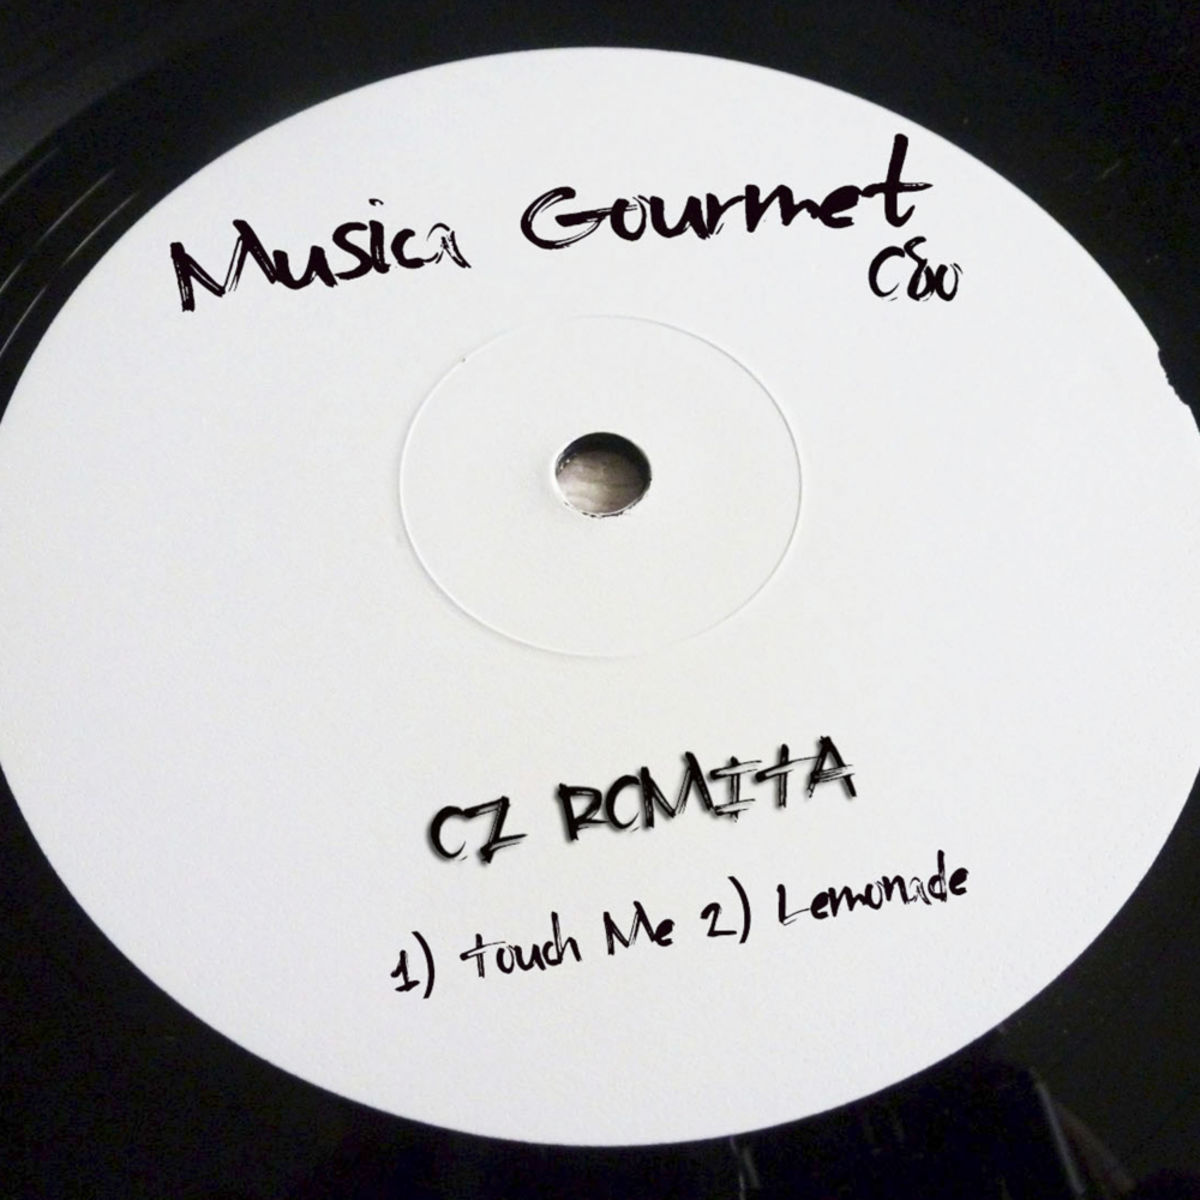 Oz Romita - Touch Me / Musica Gourmet